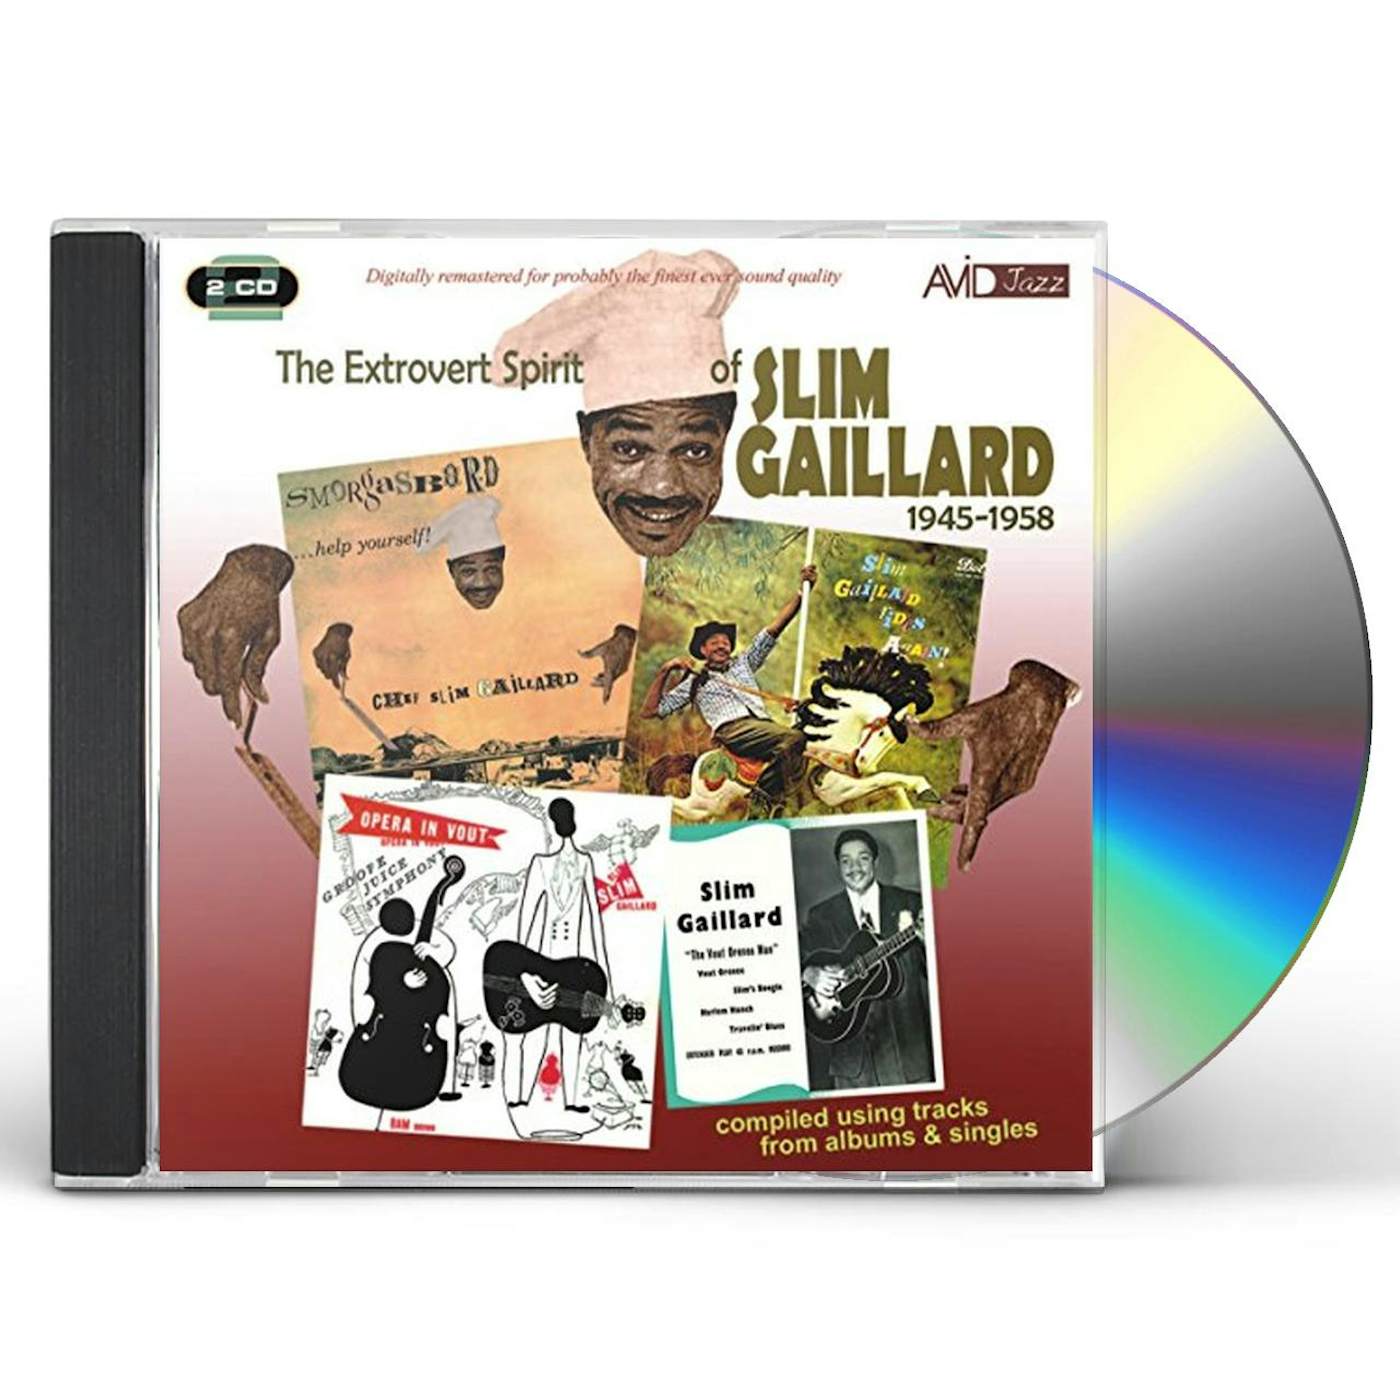 Slim Gaillard VOUT ORENEE MAN / OPERA IN VOUT CD